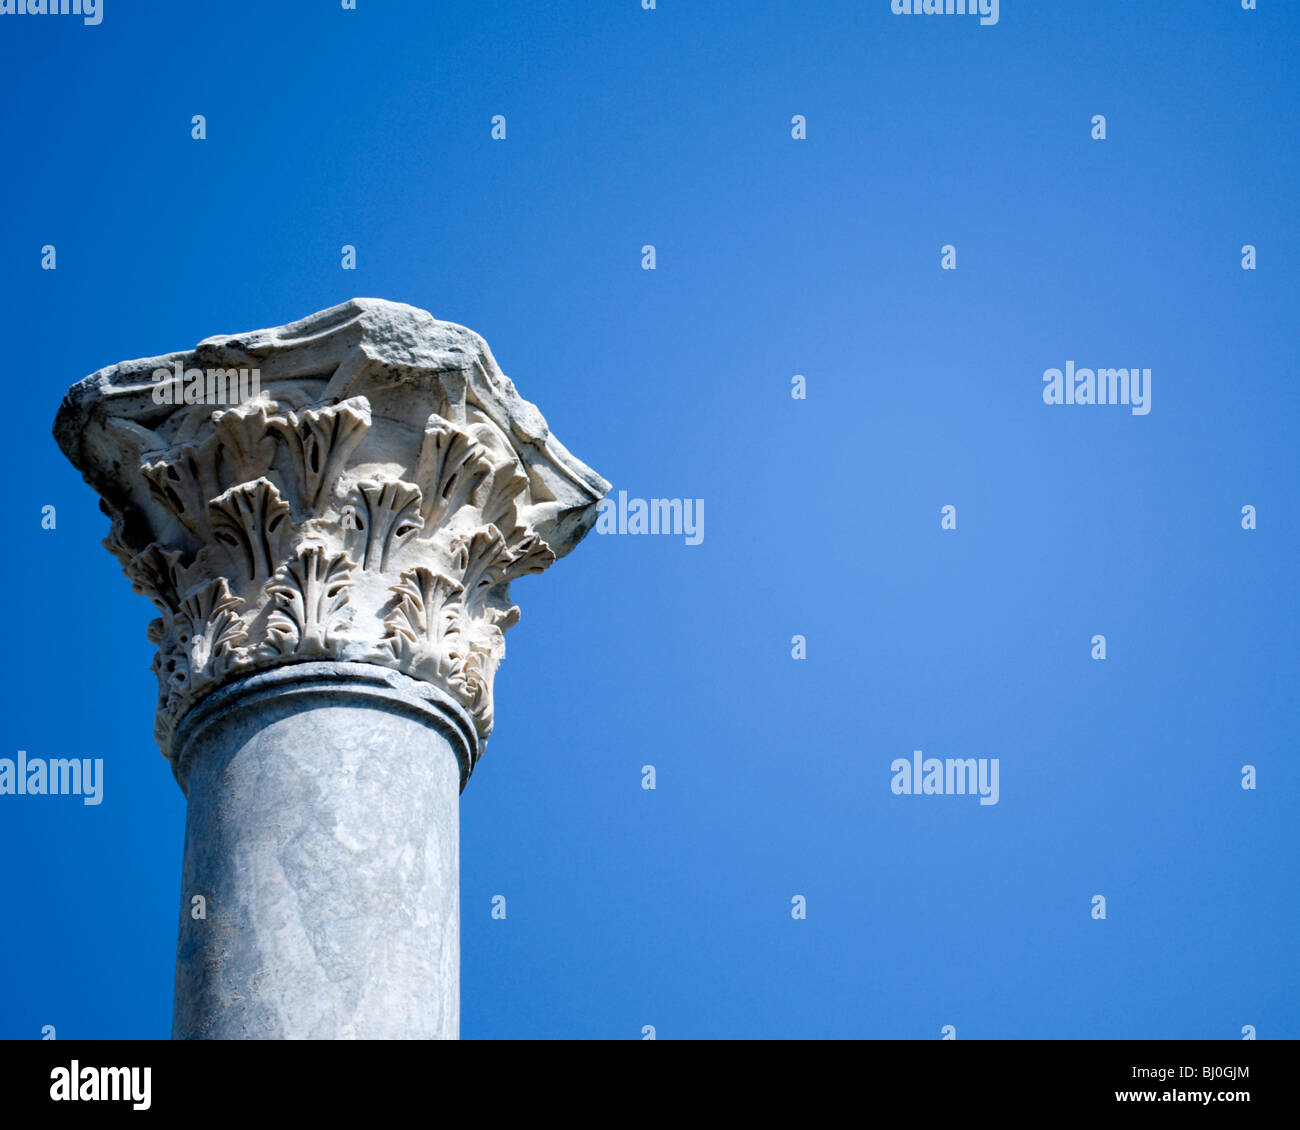 Corinthian column against a blue sky Stock Photo